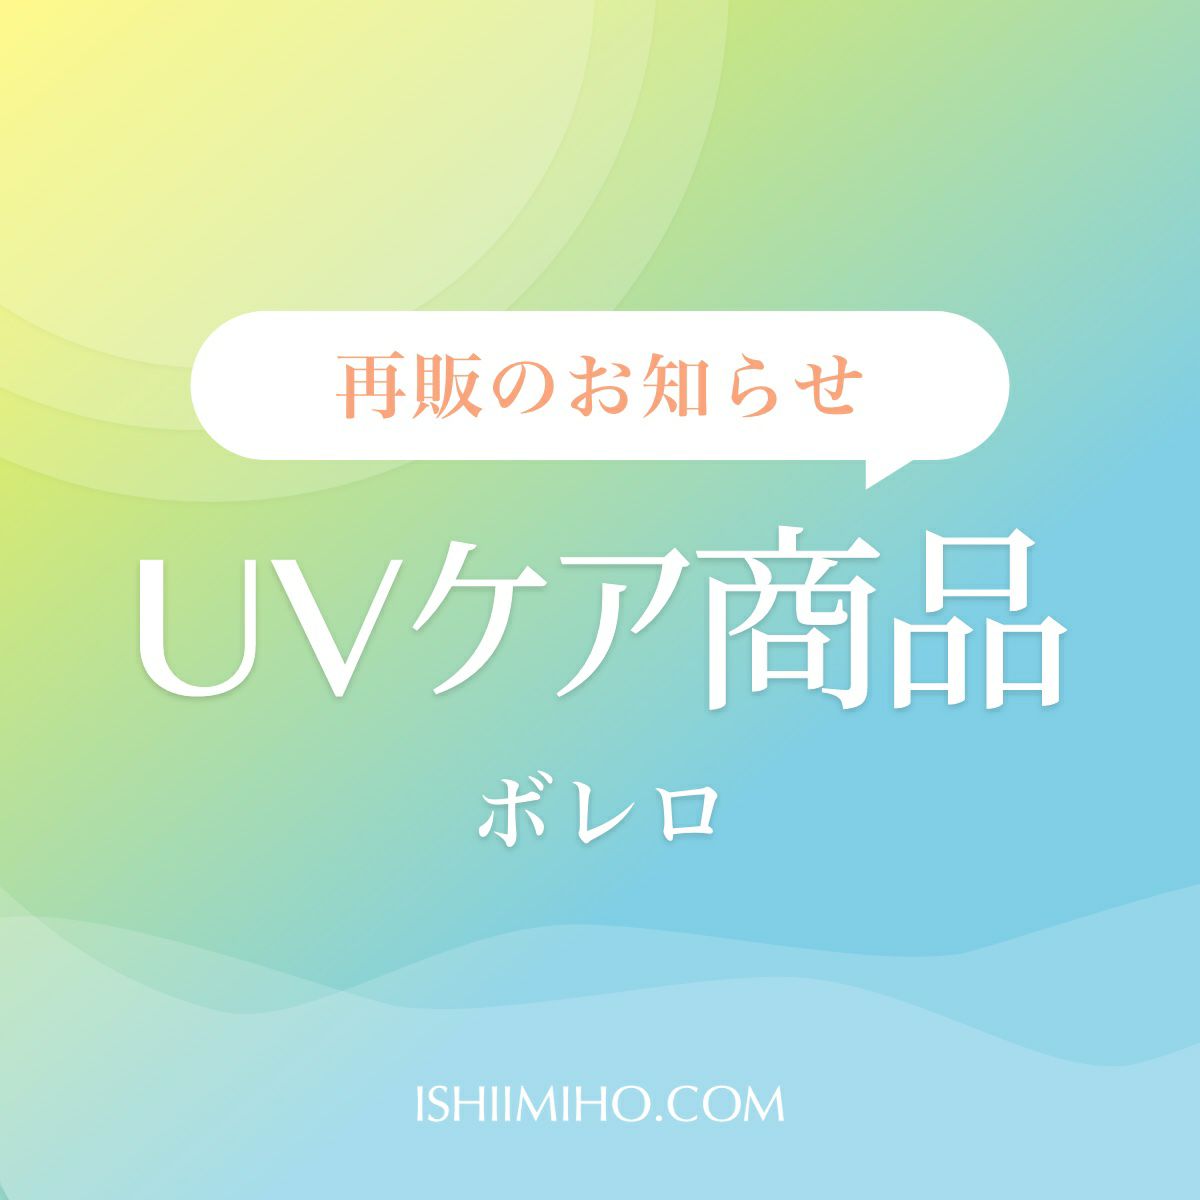 UVボレロ パールボタン ISHIMIHO.COM